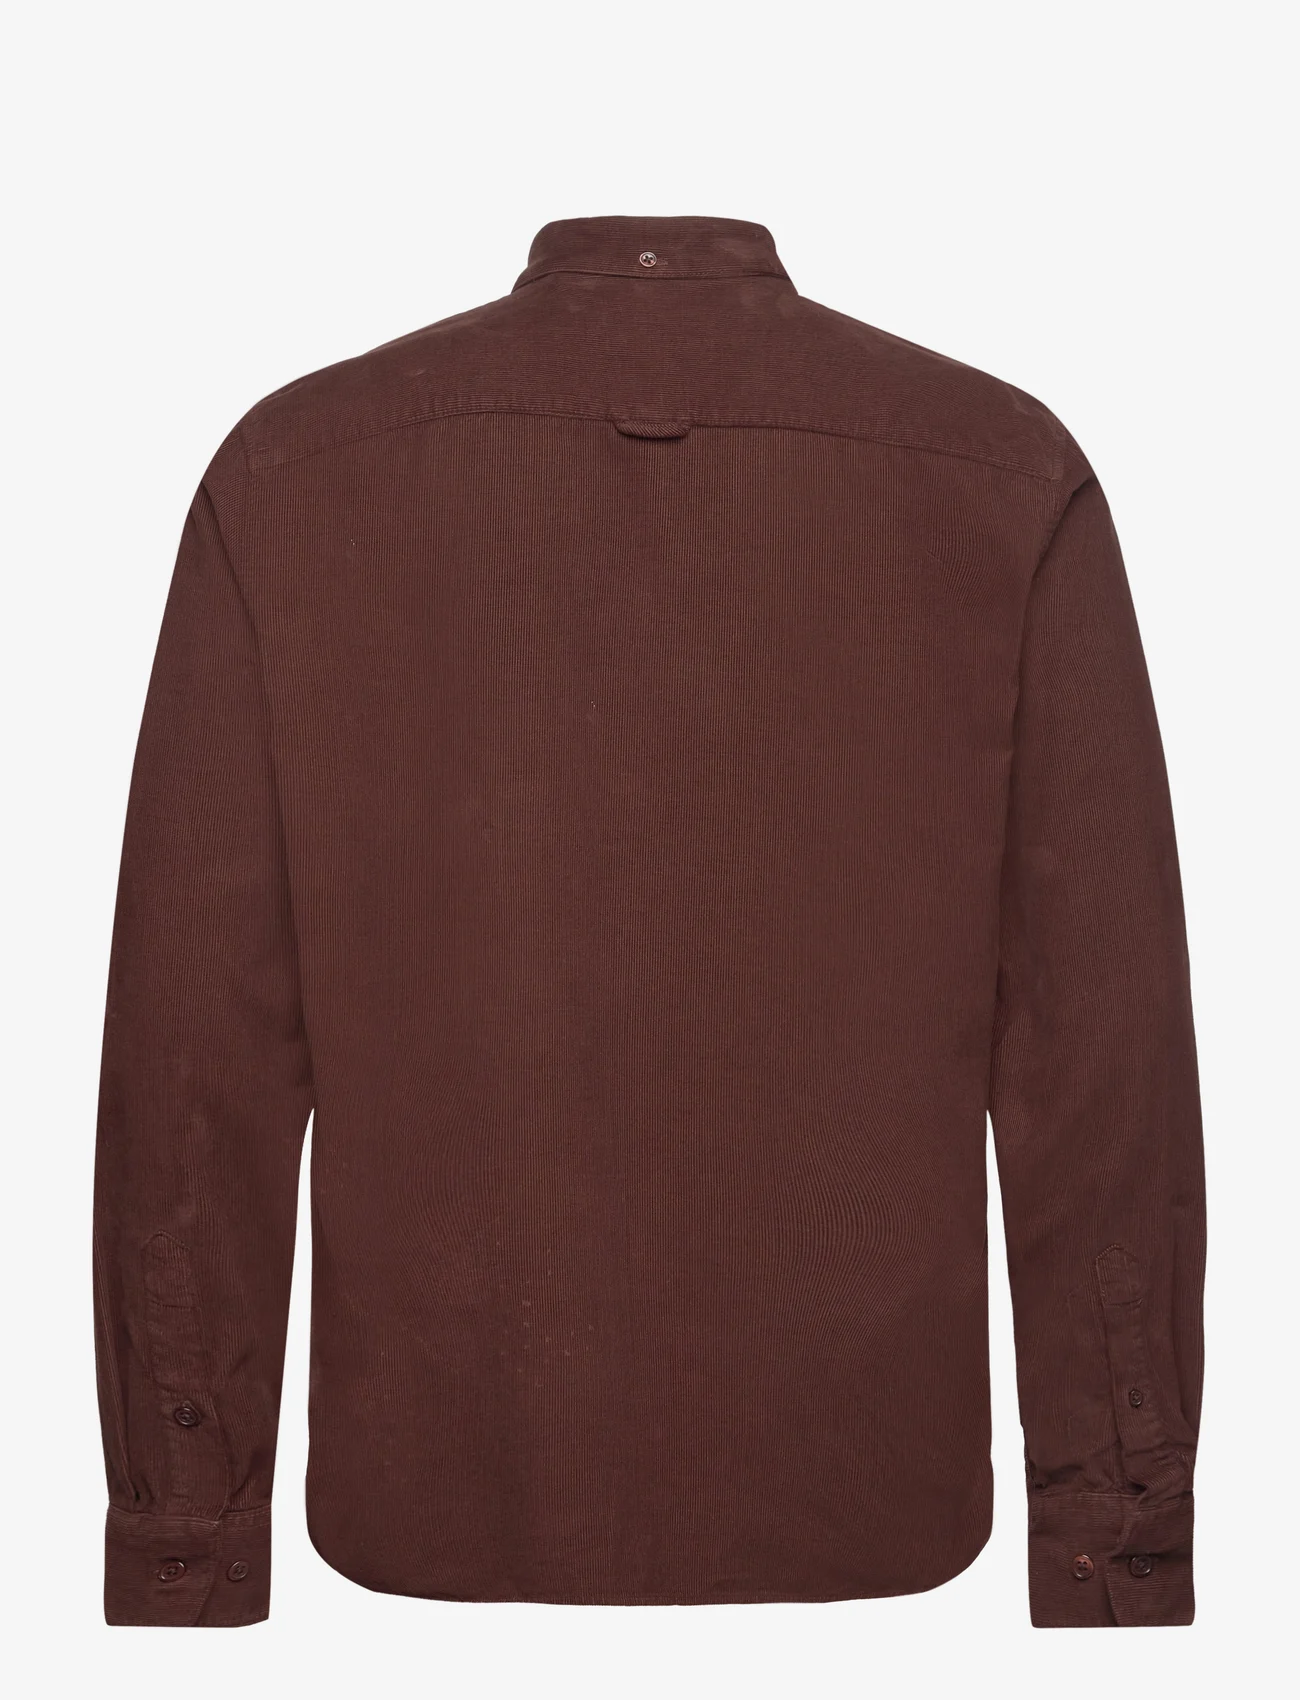 By Garment Makers - Vincent Corduroy Shirt GOTS - velvetiniai marškiniai - 1258 beaver - 1